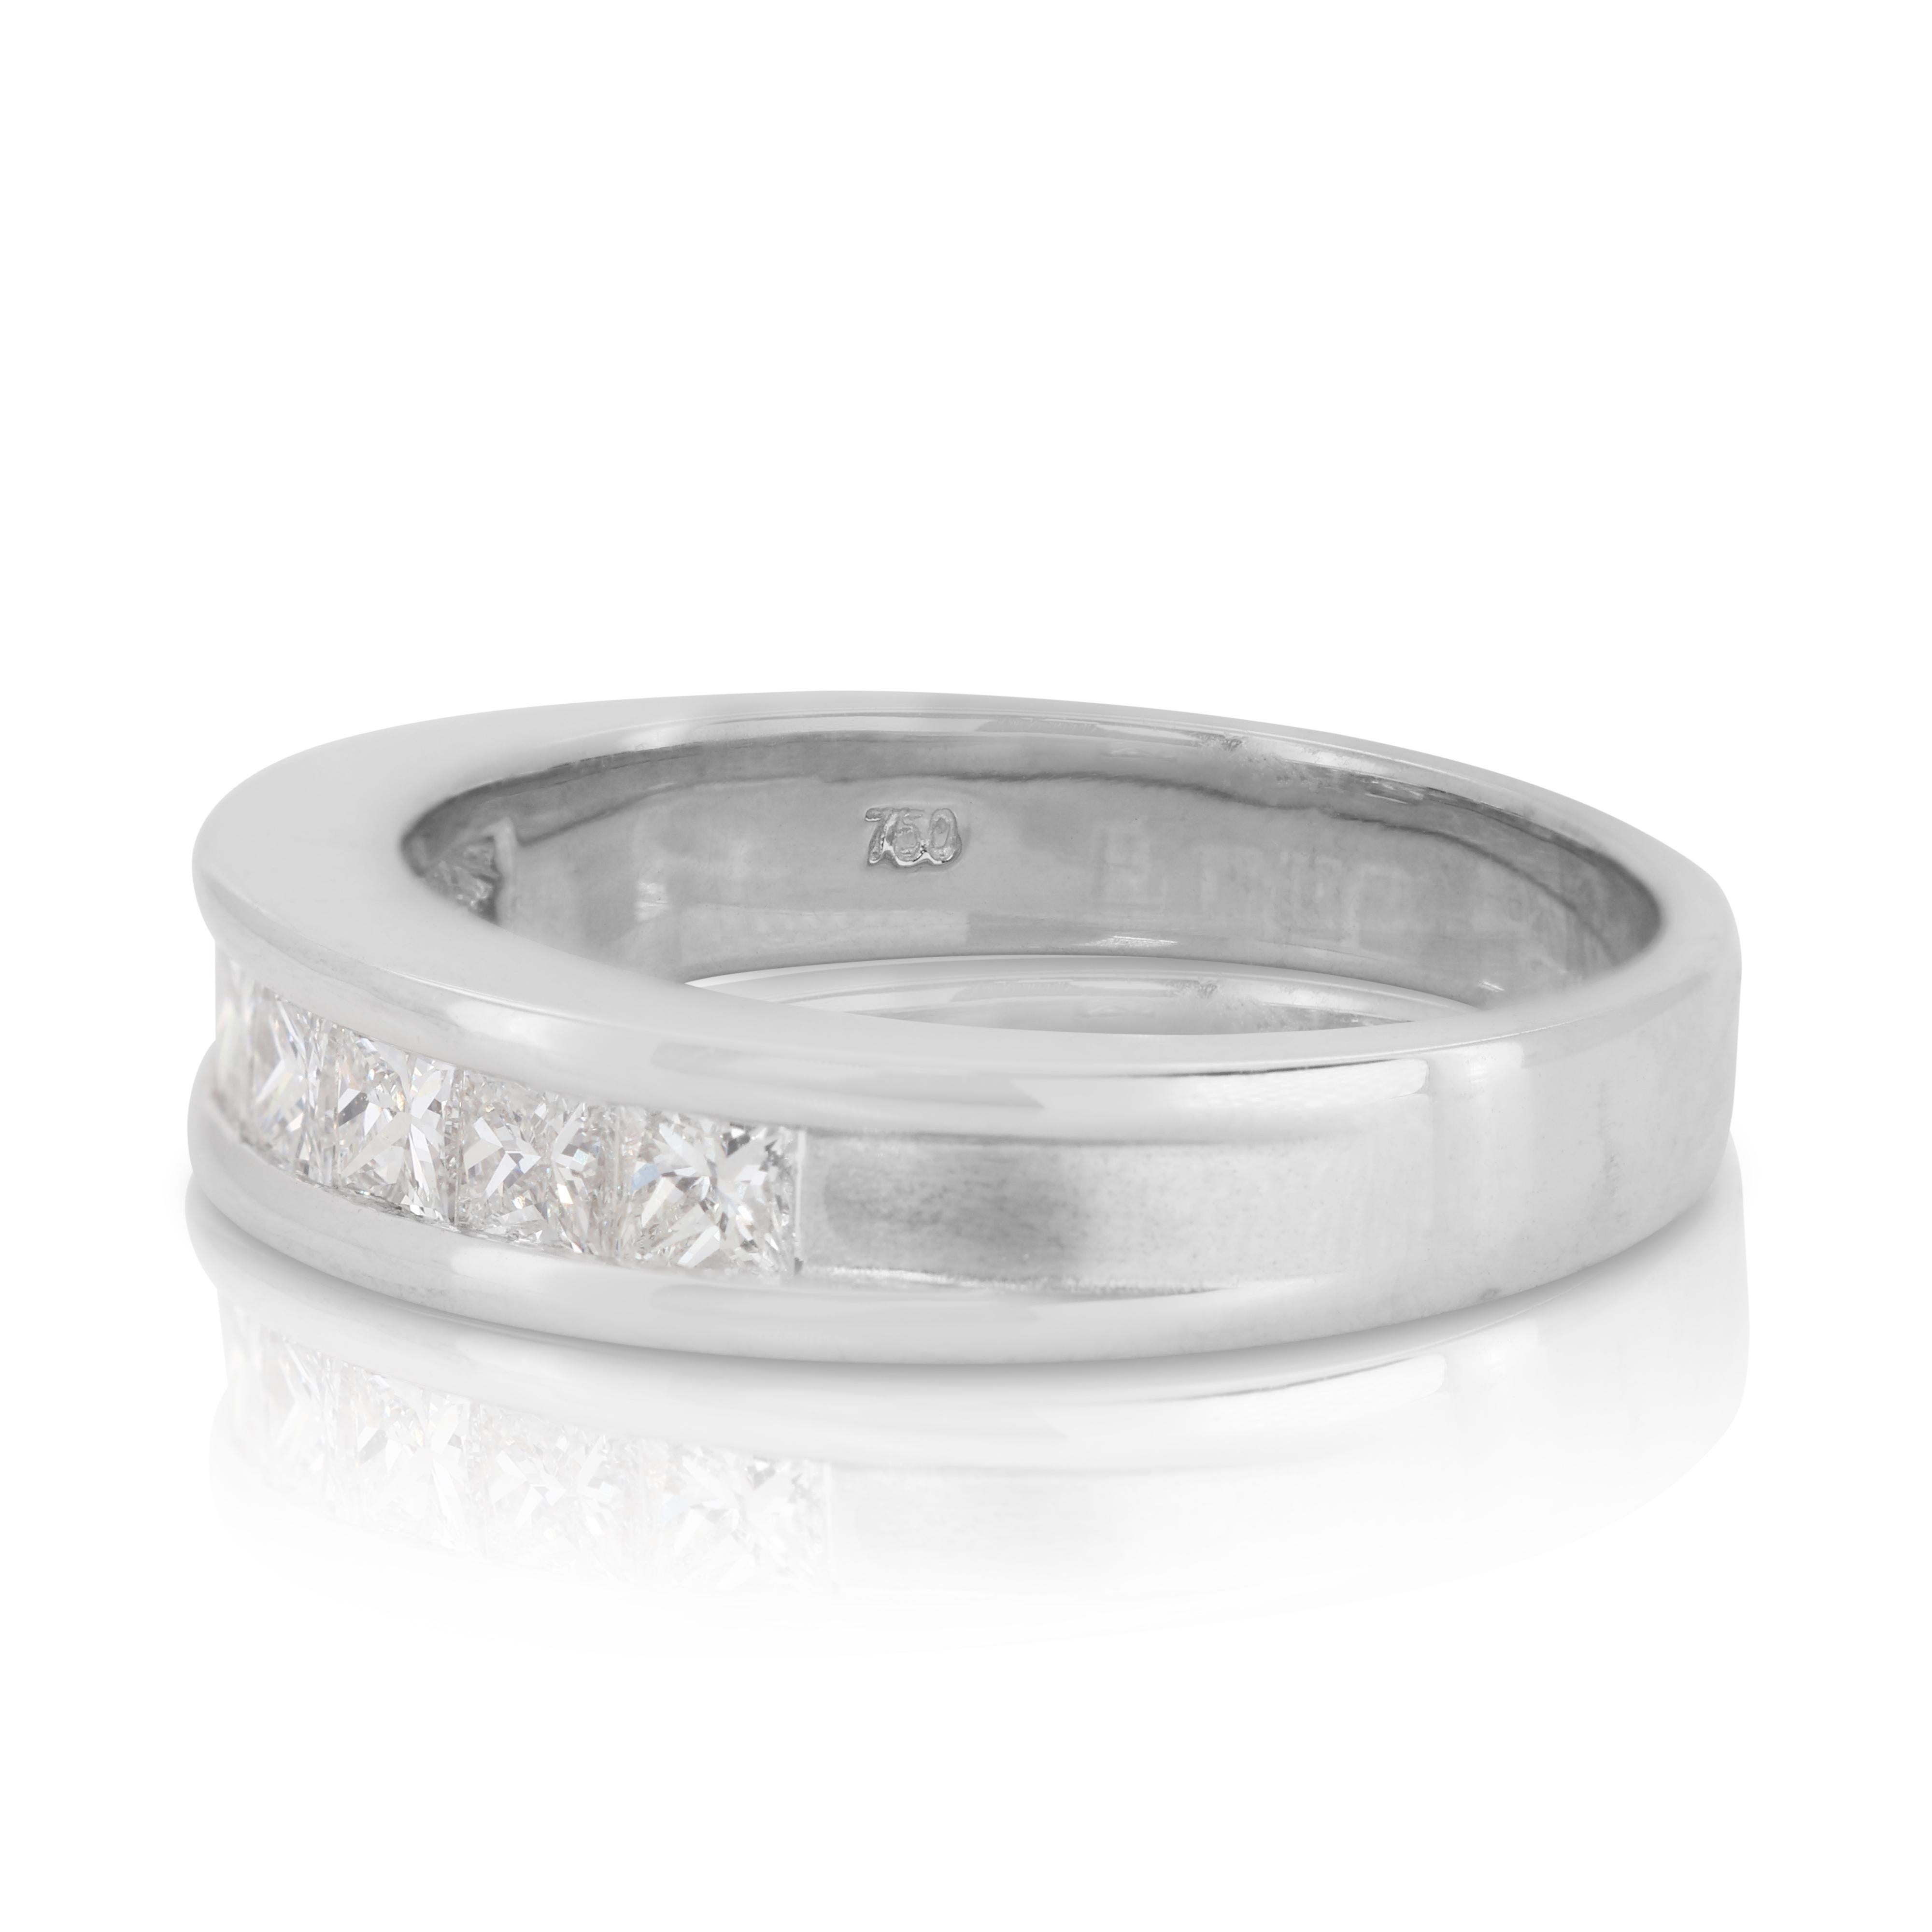 Luminous 3.03 ct Princess Cut Diamond Pave Ring in Platinum - IGI Certified For Sale 3